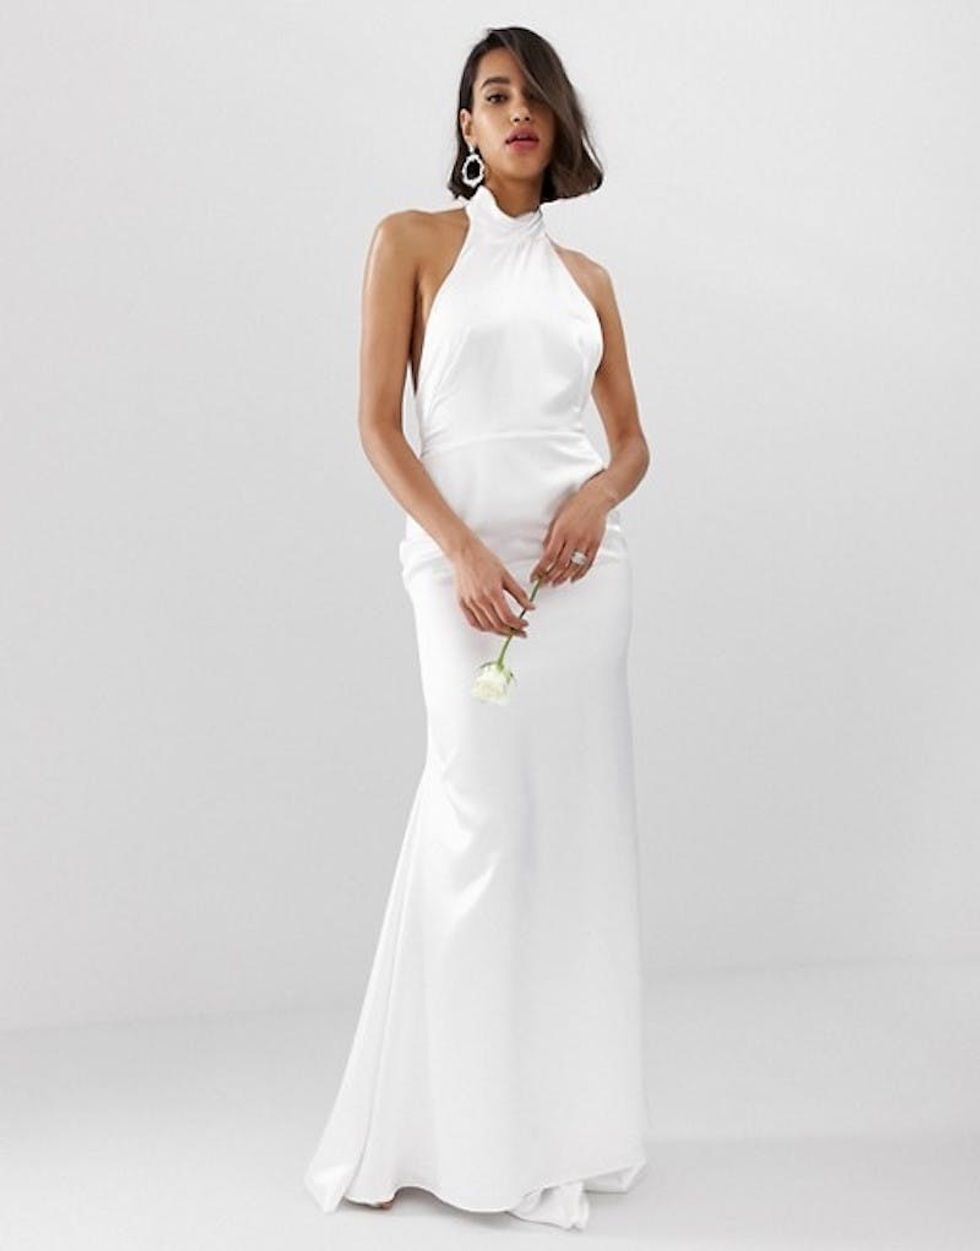 13 Budget-Friendly ’90s Style Wedding Dresses for 2019 Brides - Brit + Co